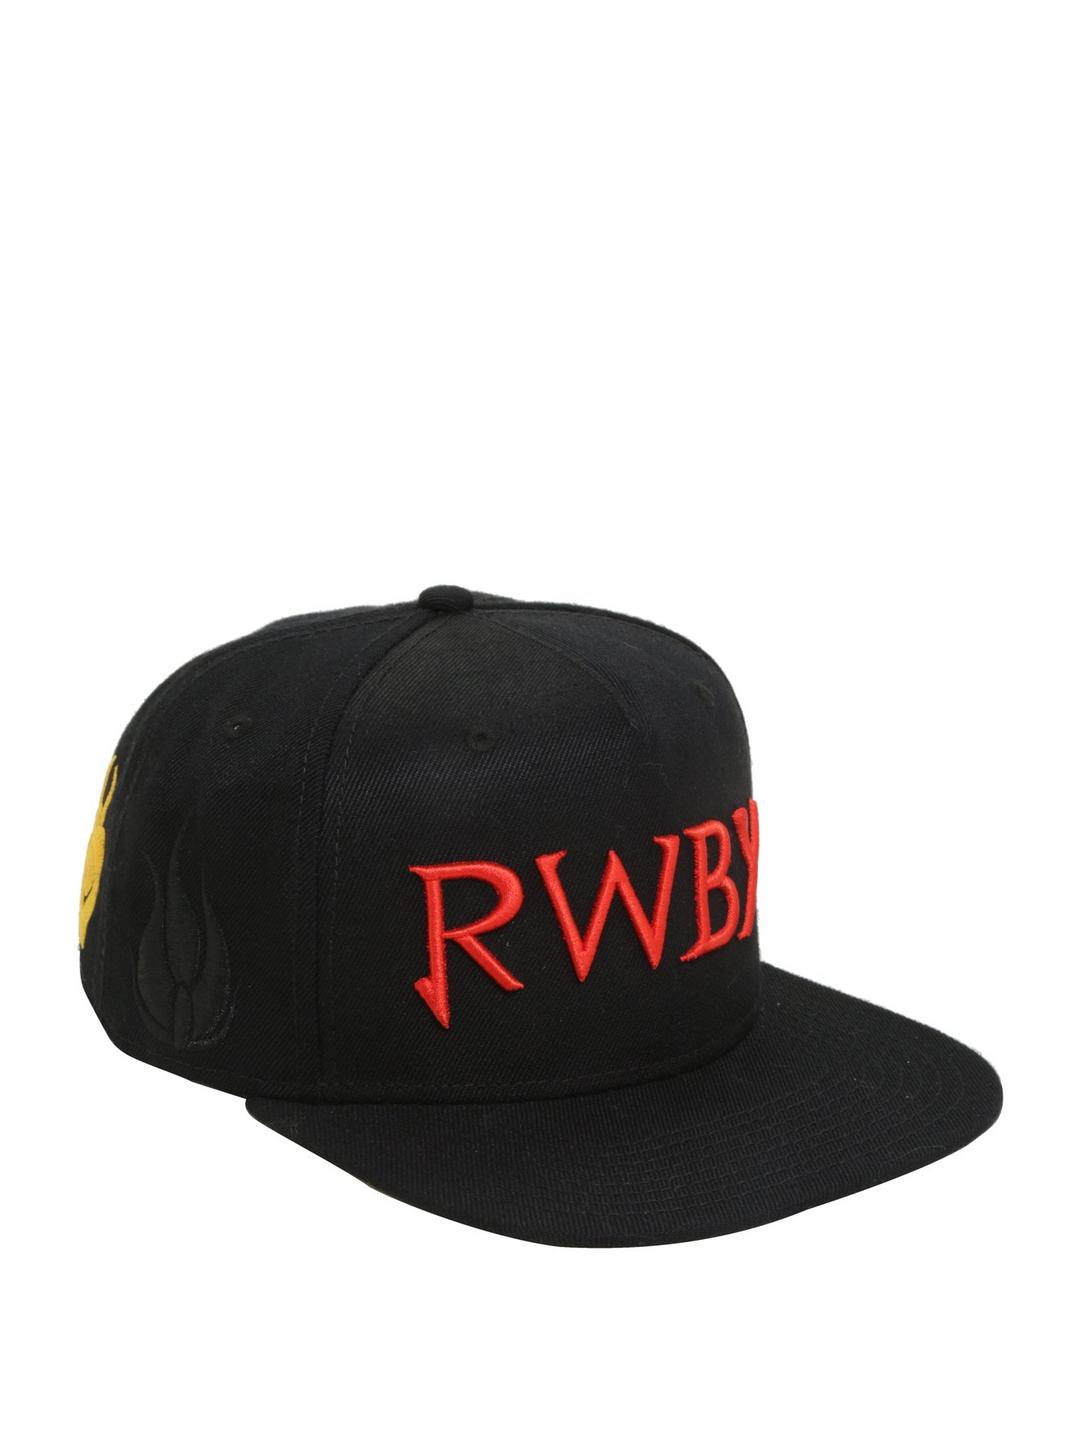 RWBY Omni Team Symbols Embroidered Snapback Hat, , hi-res